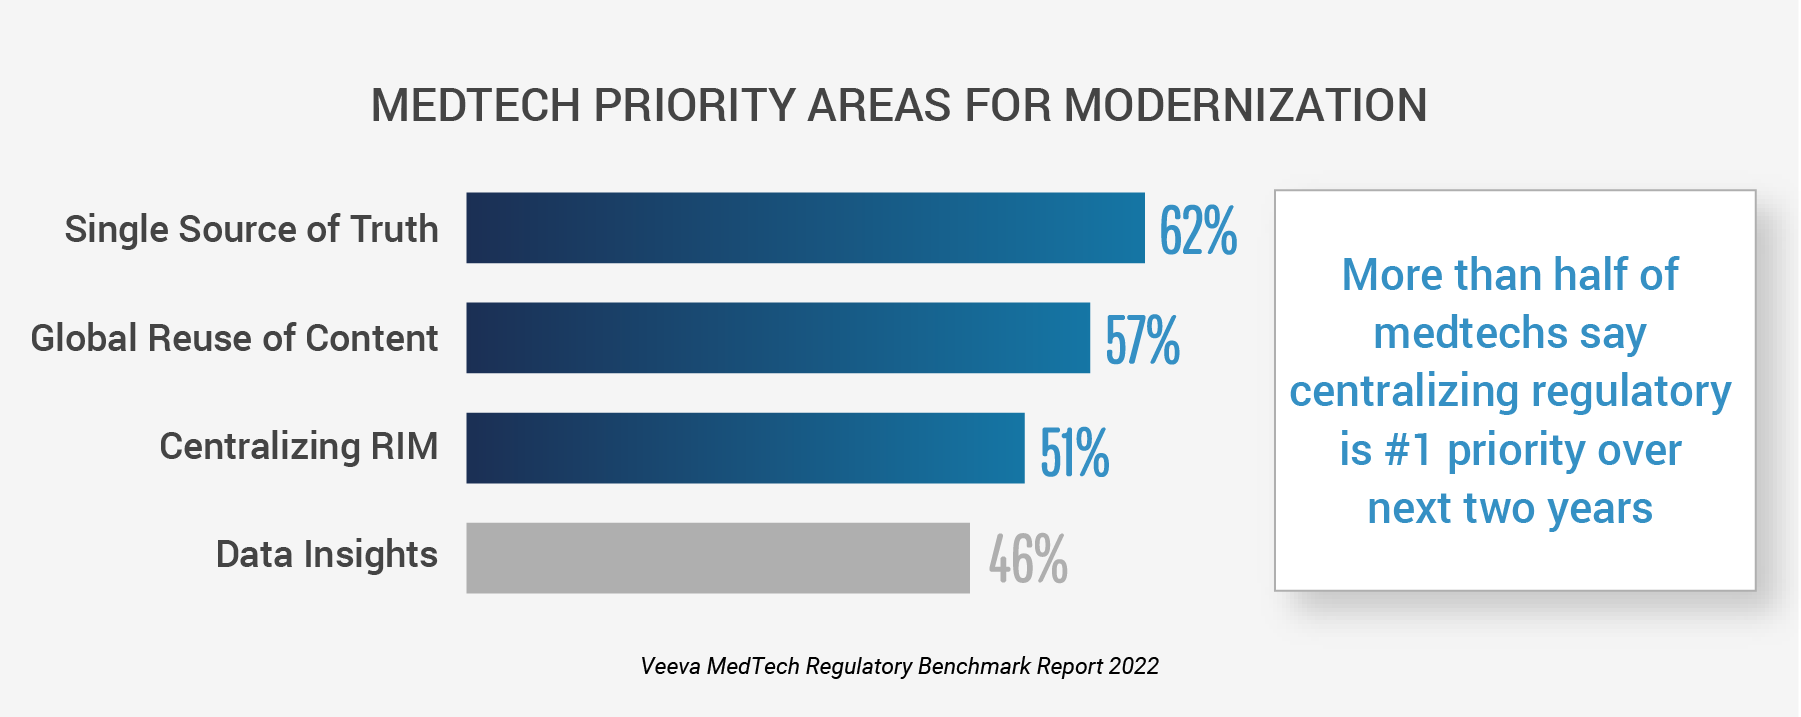 Veeva MedTech regulatory benchmark report 2022